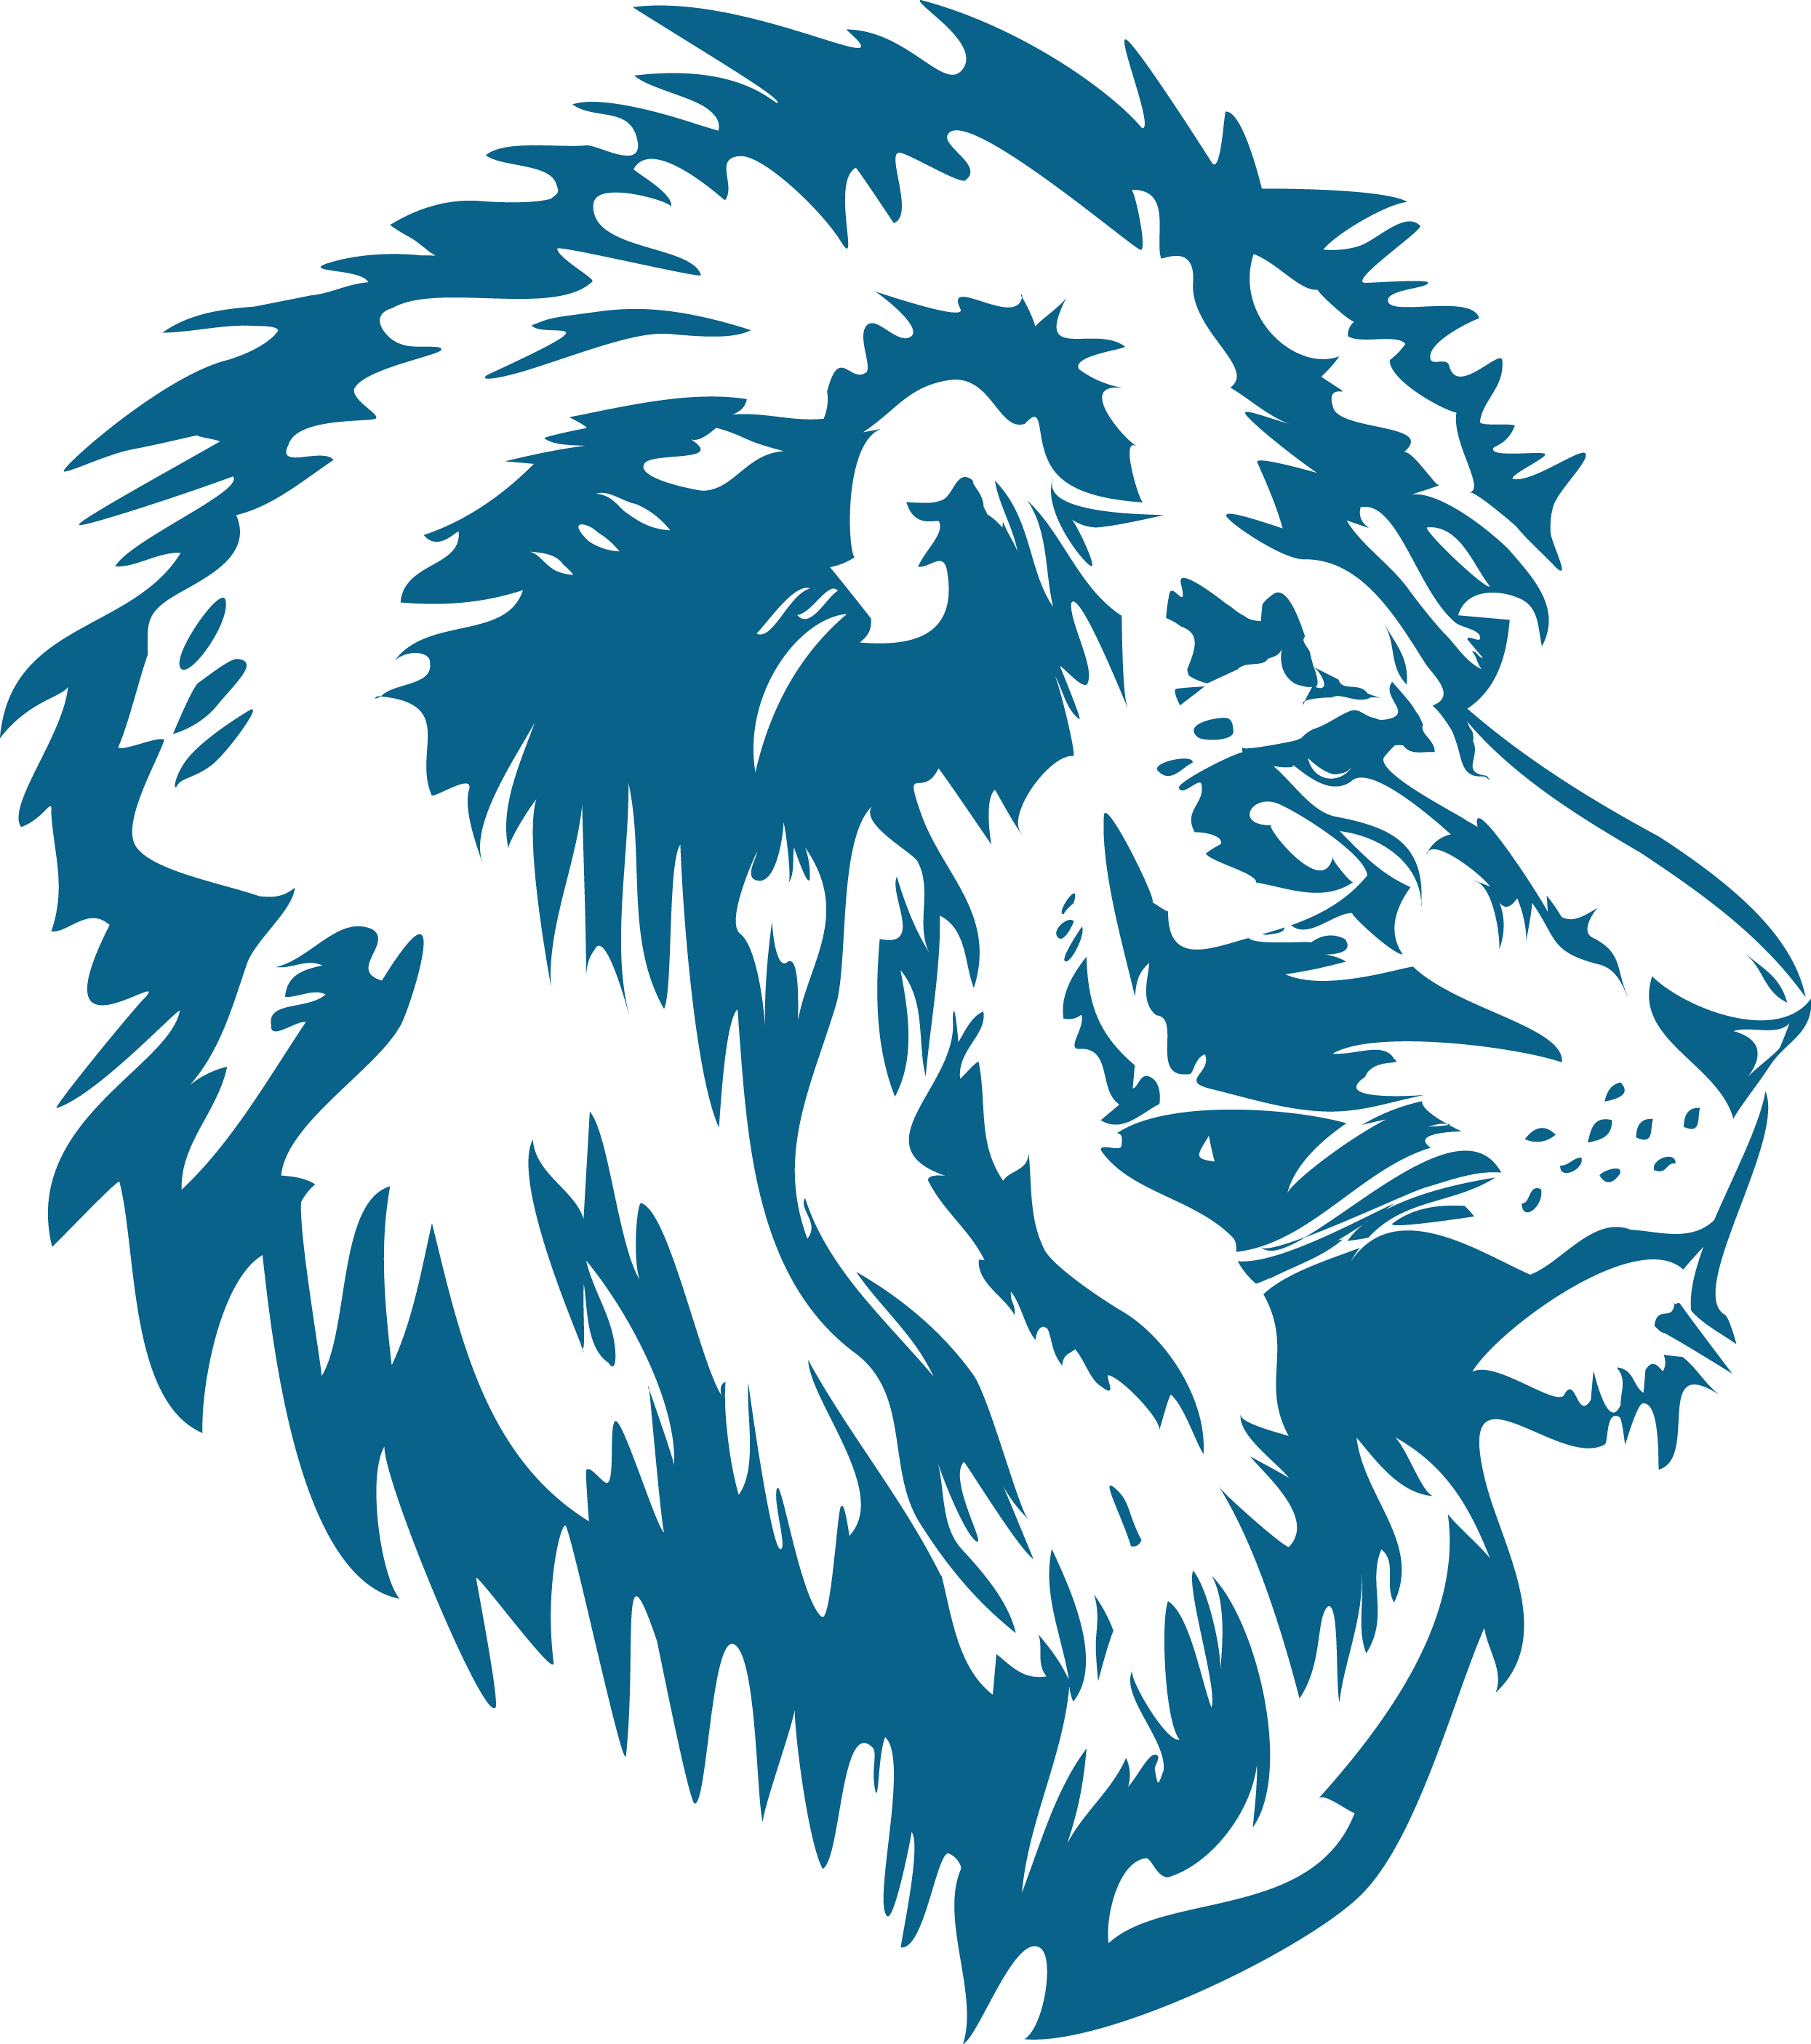 White and Blue Lion Logo - Blue lion Logos